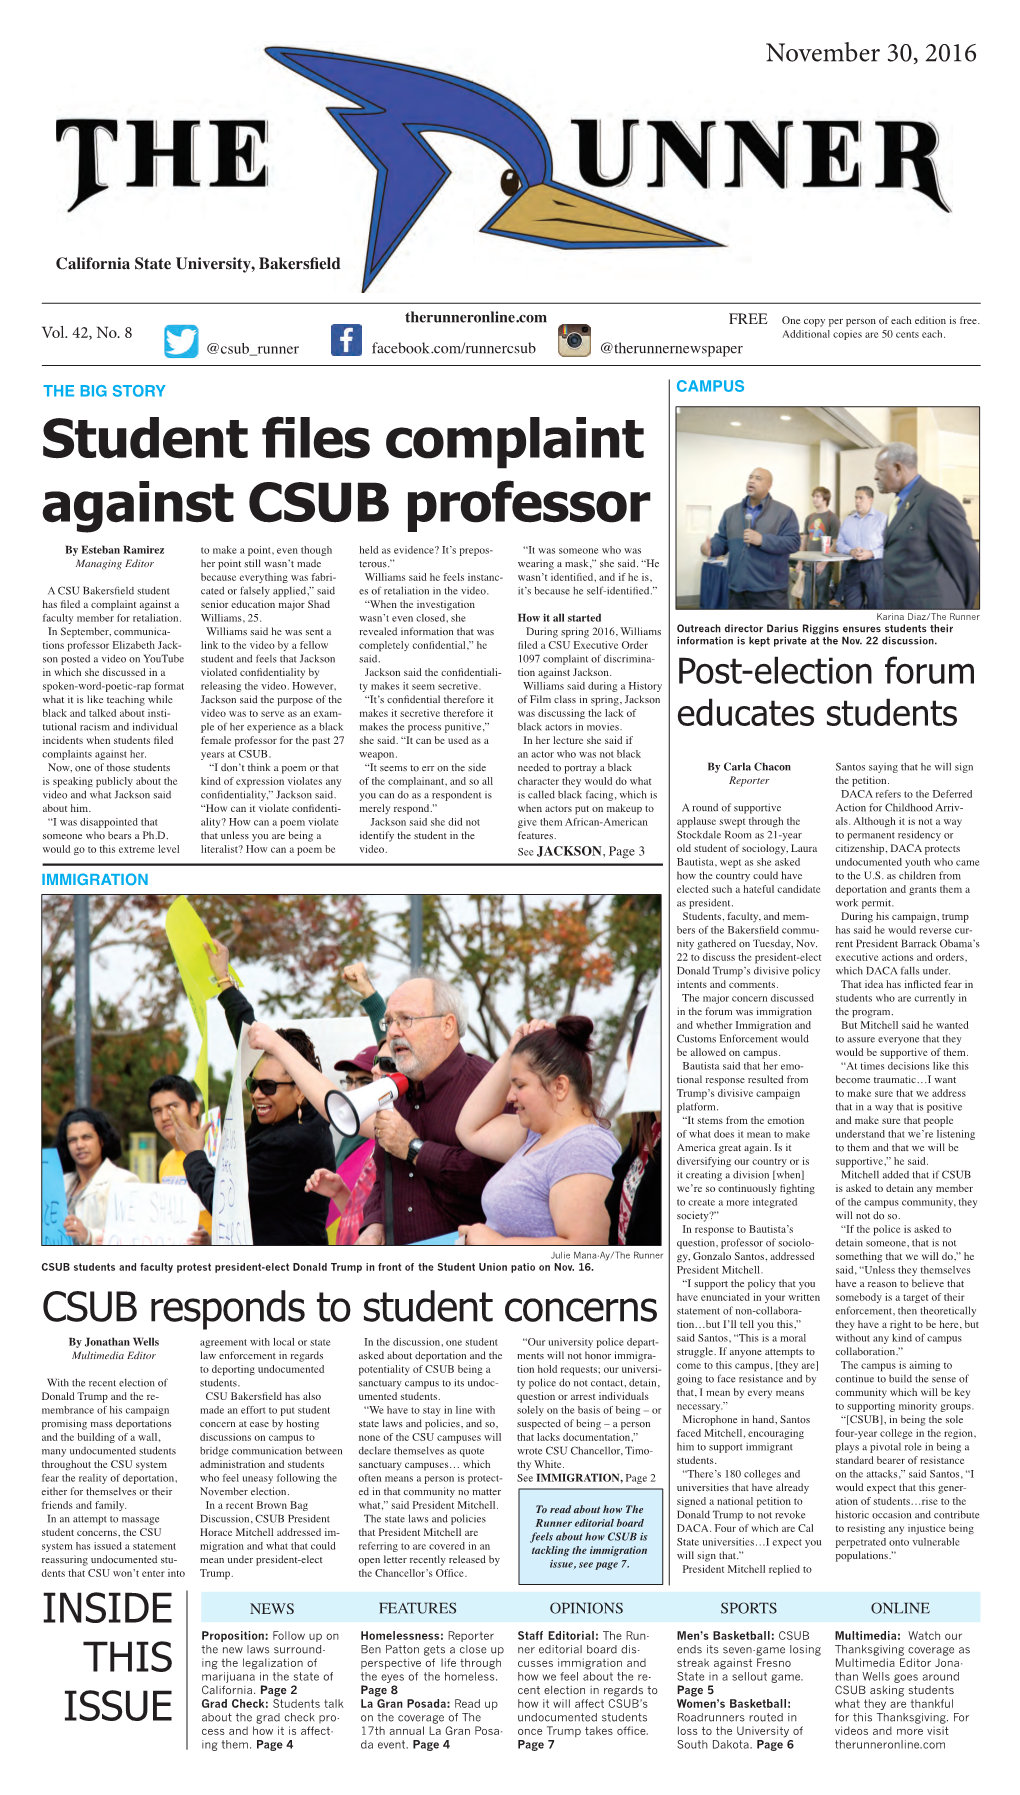 Student Files Complaint Against CSUB Professor